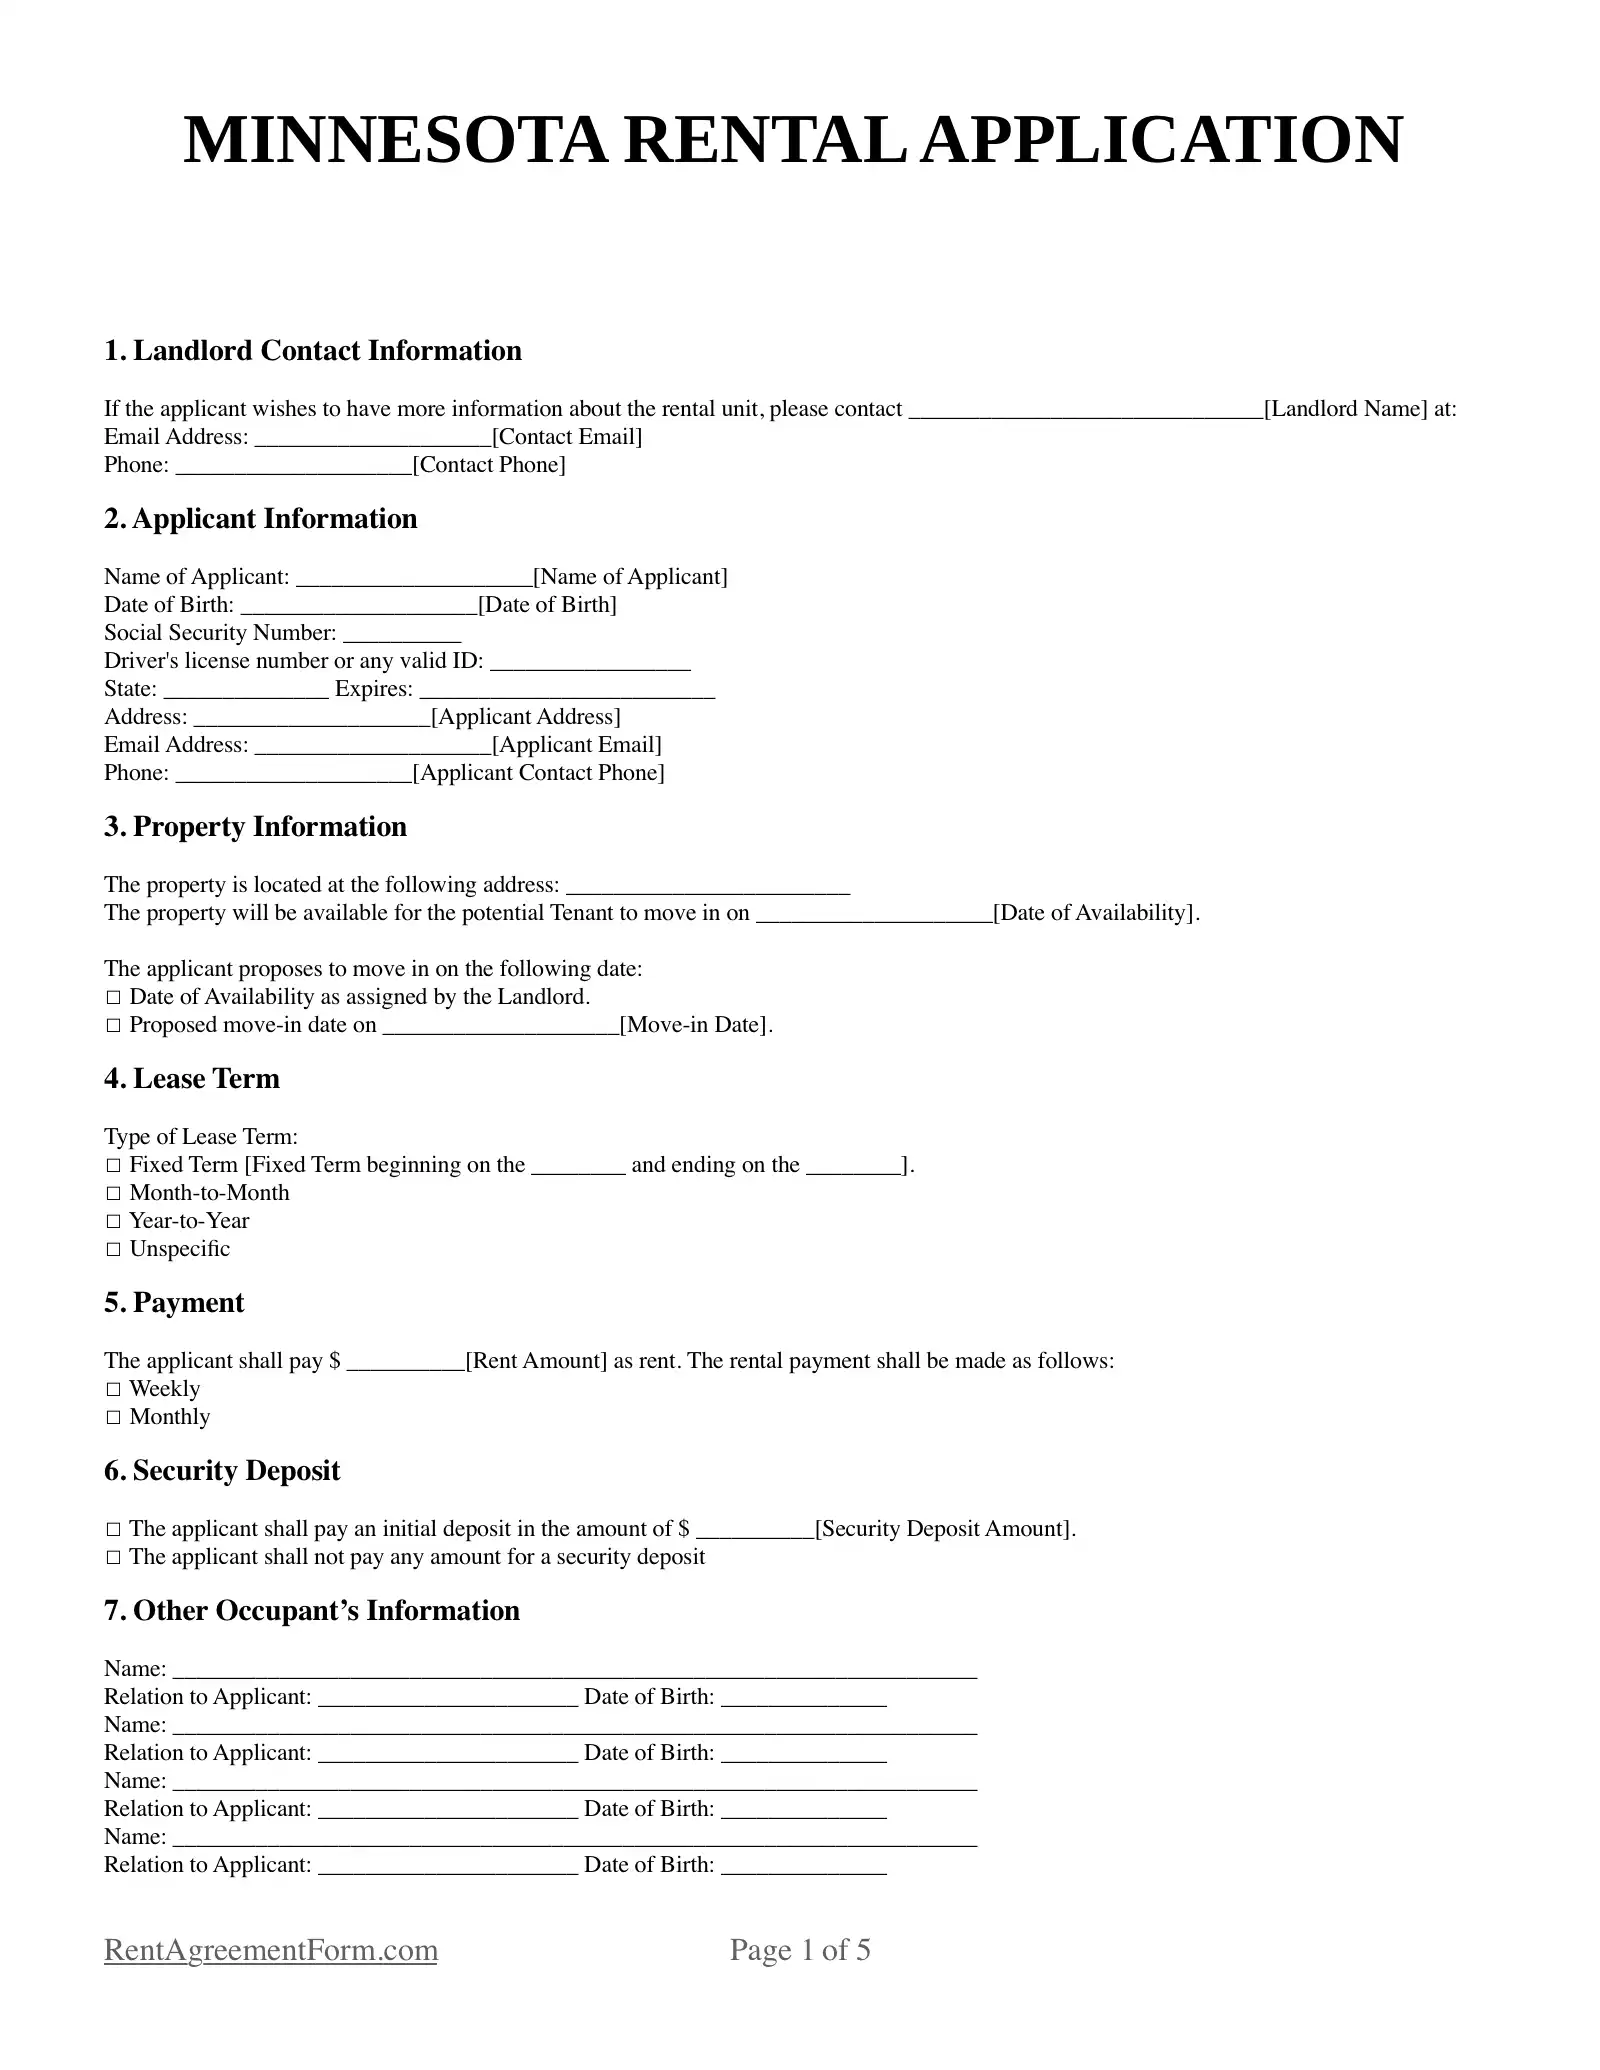 Minnesota Rental Application Sample